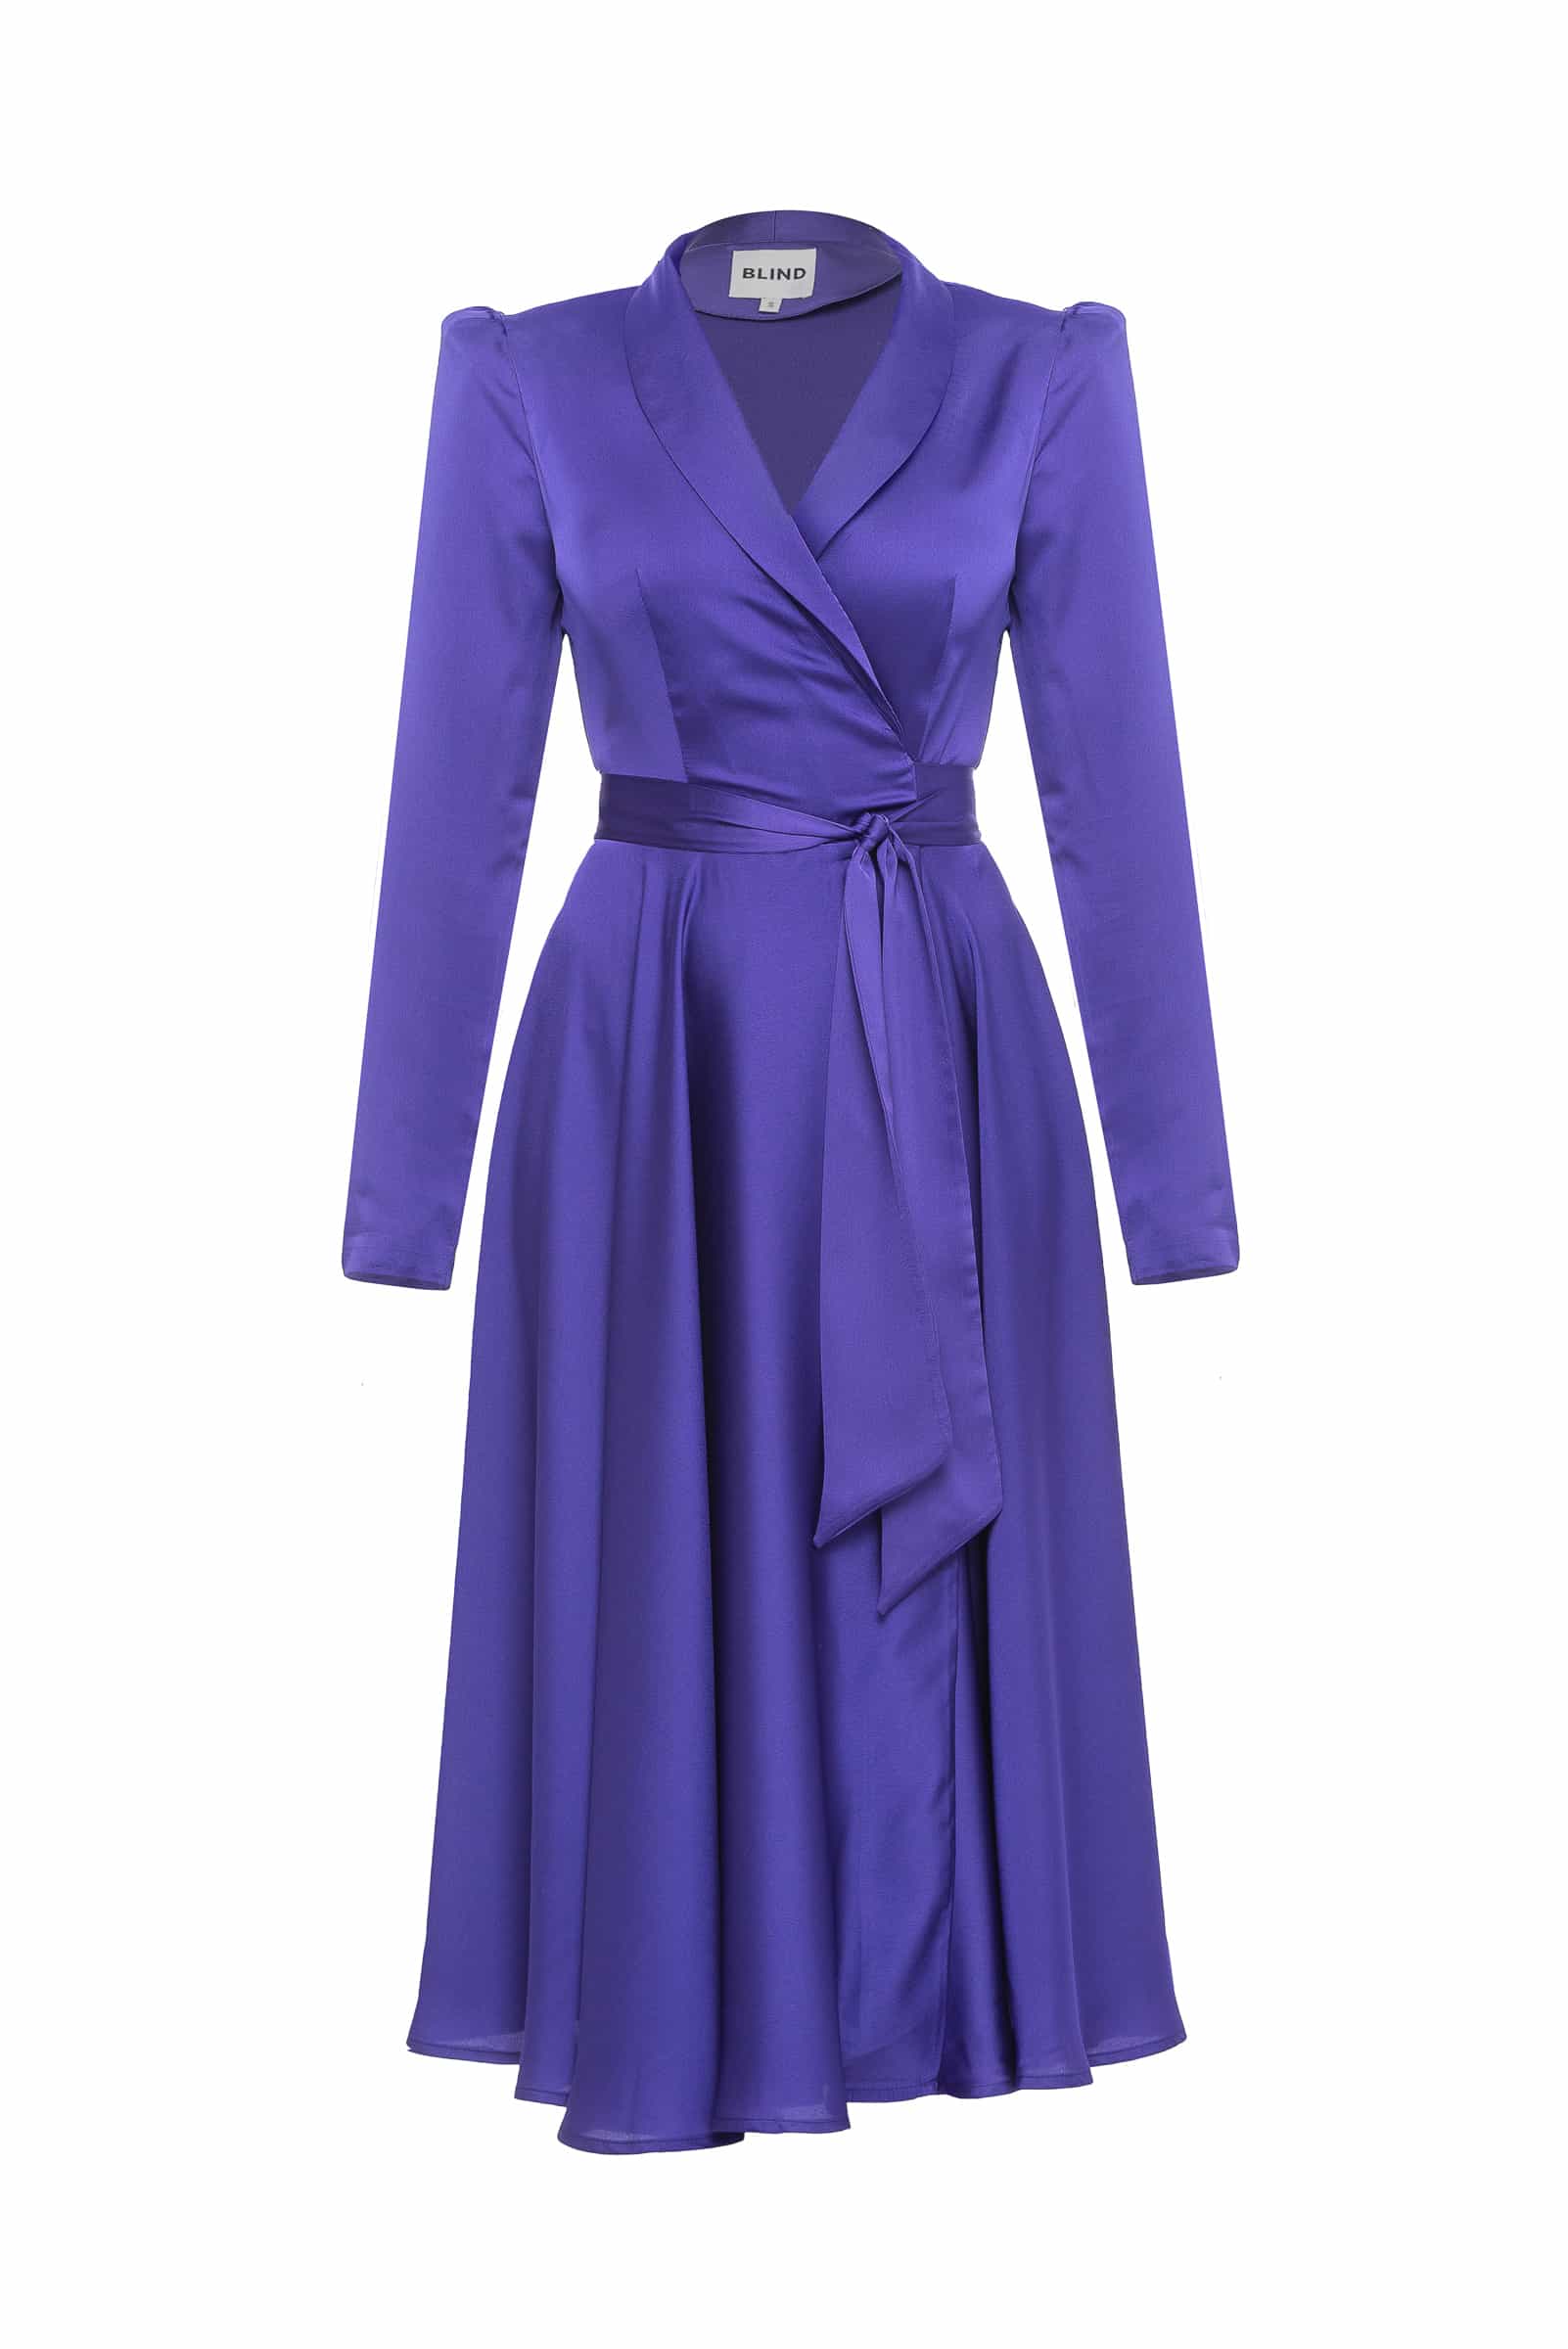 Purple silk dress.